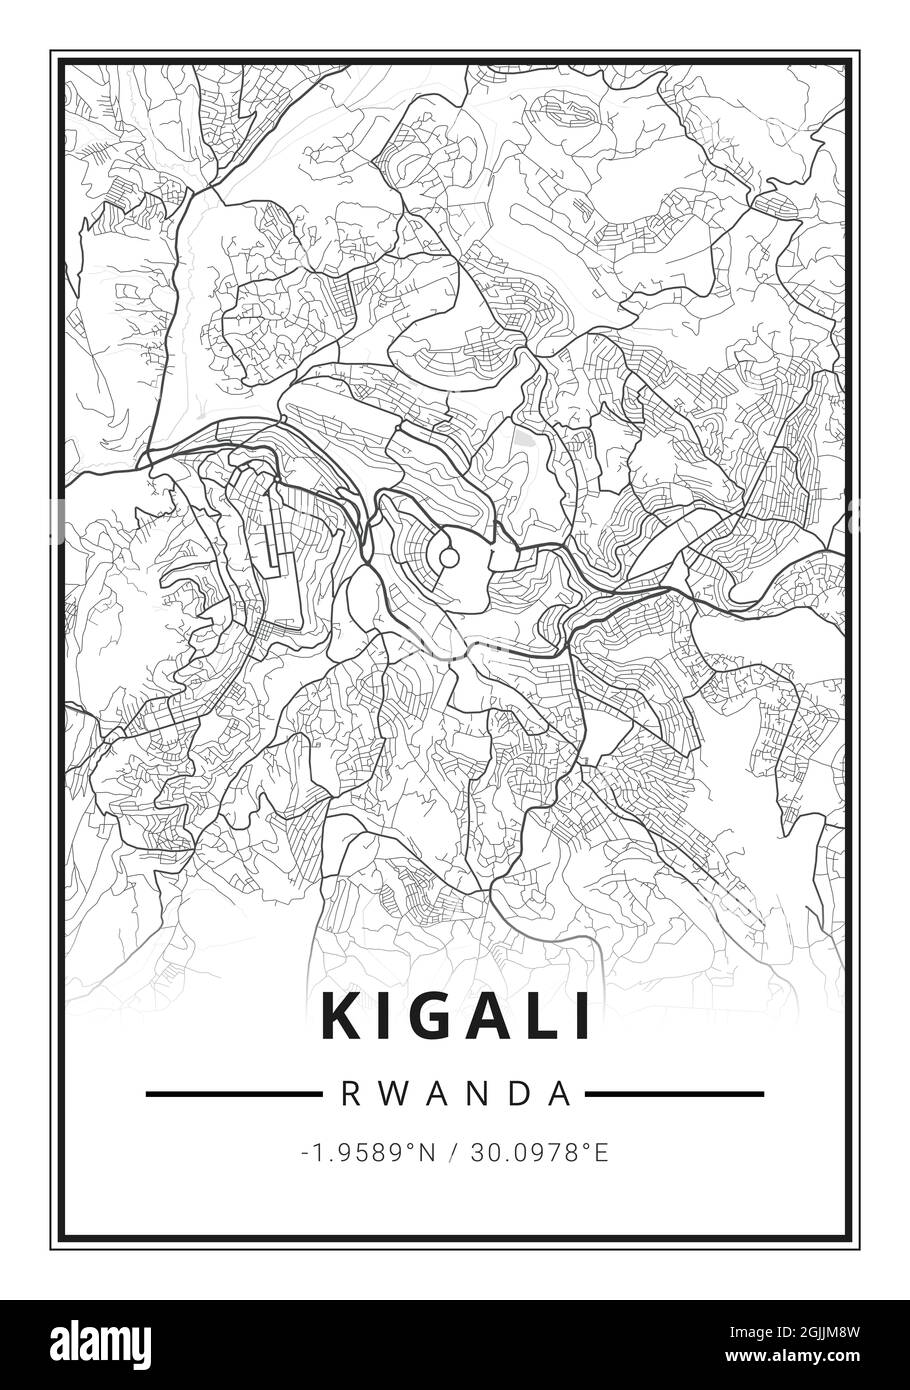 Street map art of Kigali city in Rwanda - Africa Stock Photo